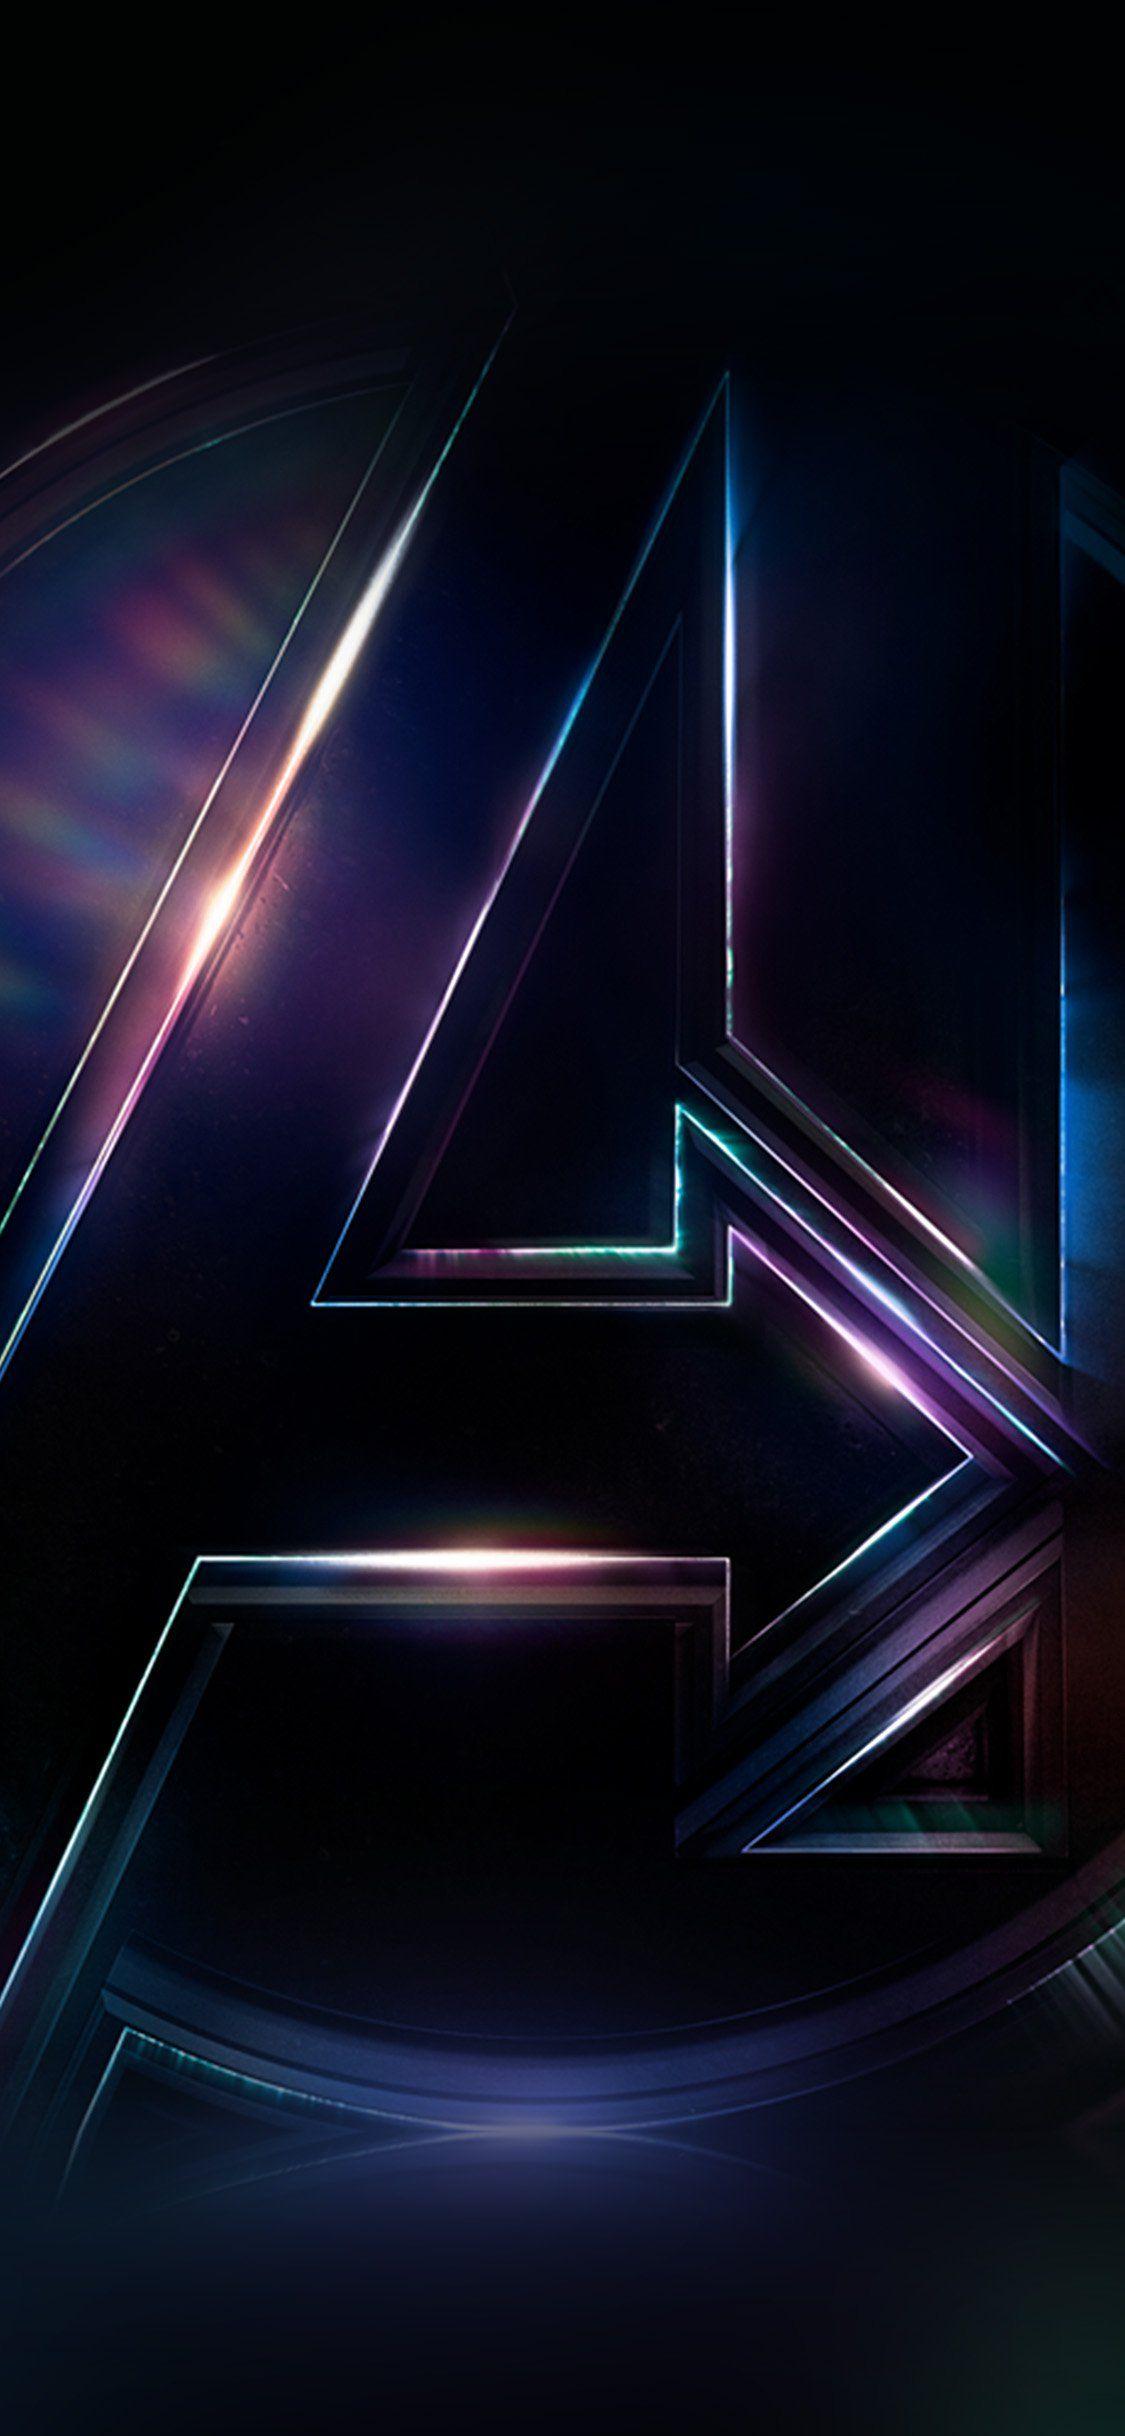 Avengers Logo iPhone Wallpapers - Top